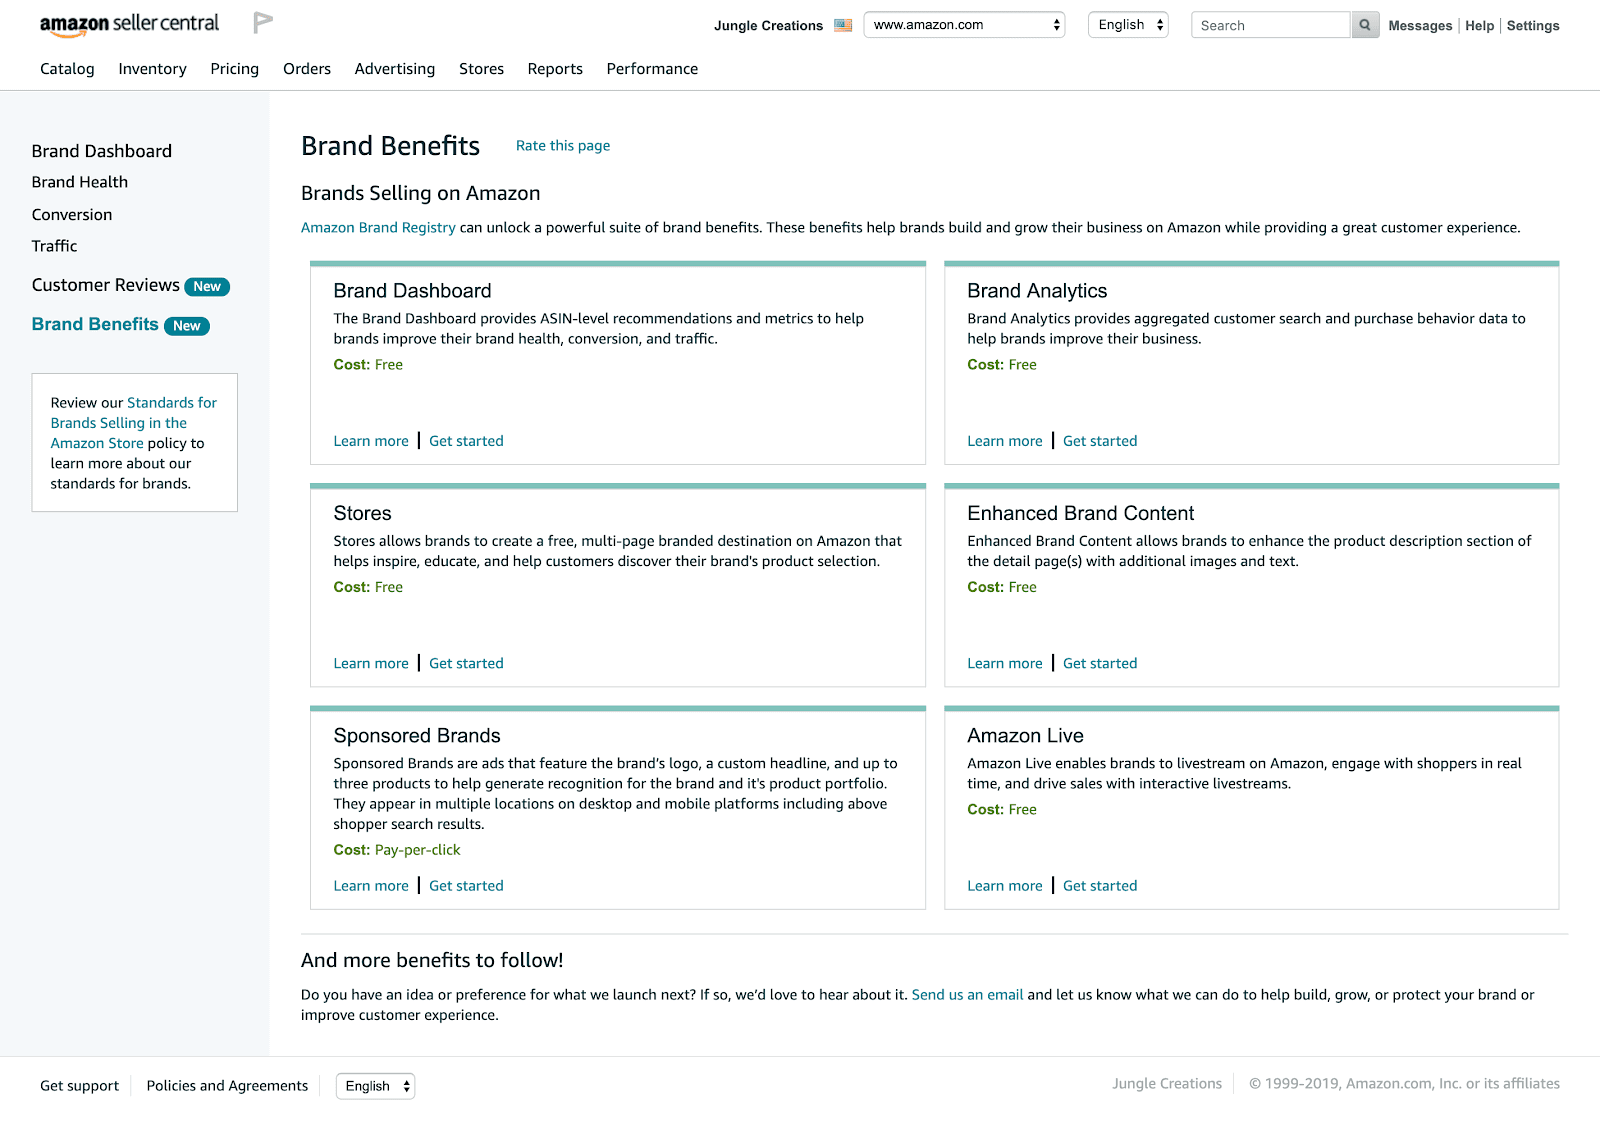 Amazon's Brand Registry benefits page